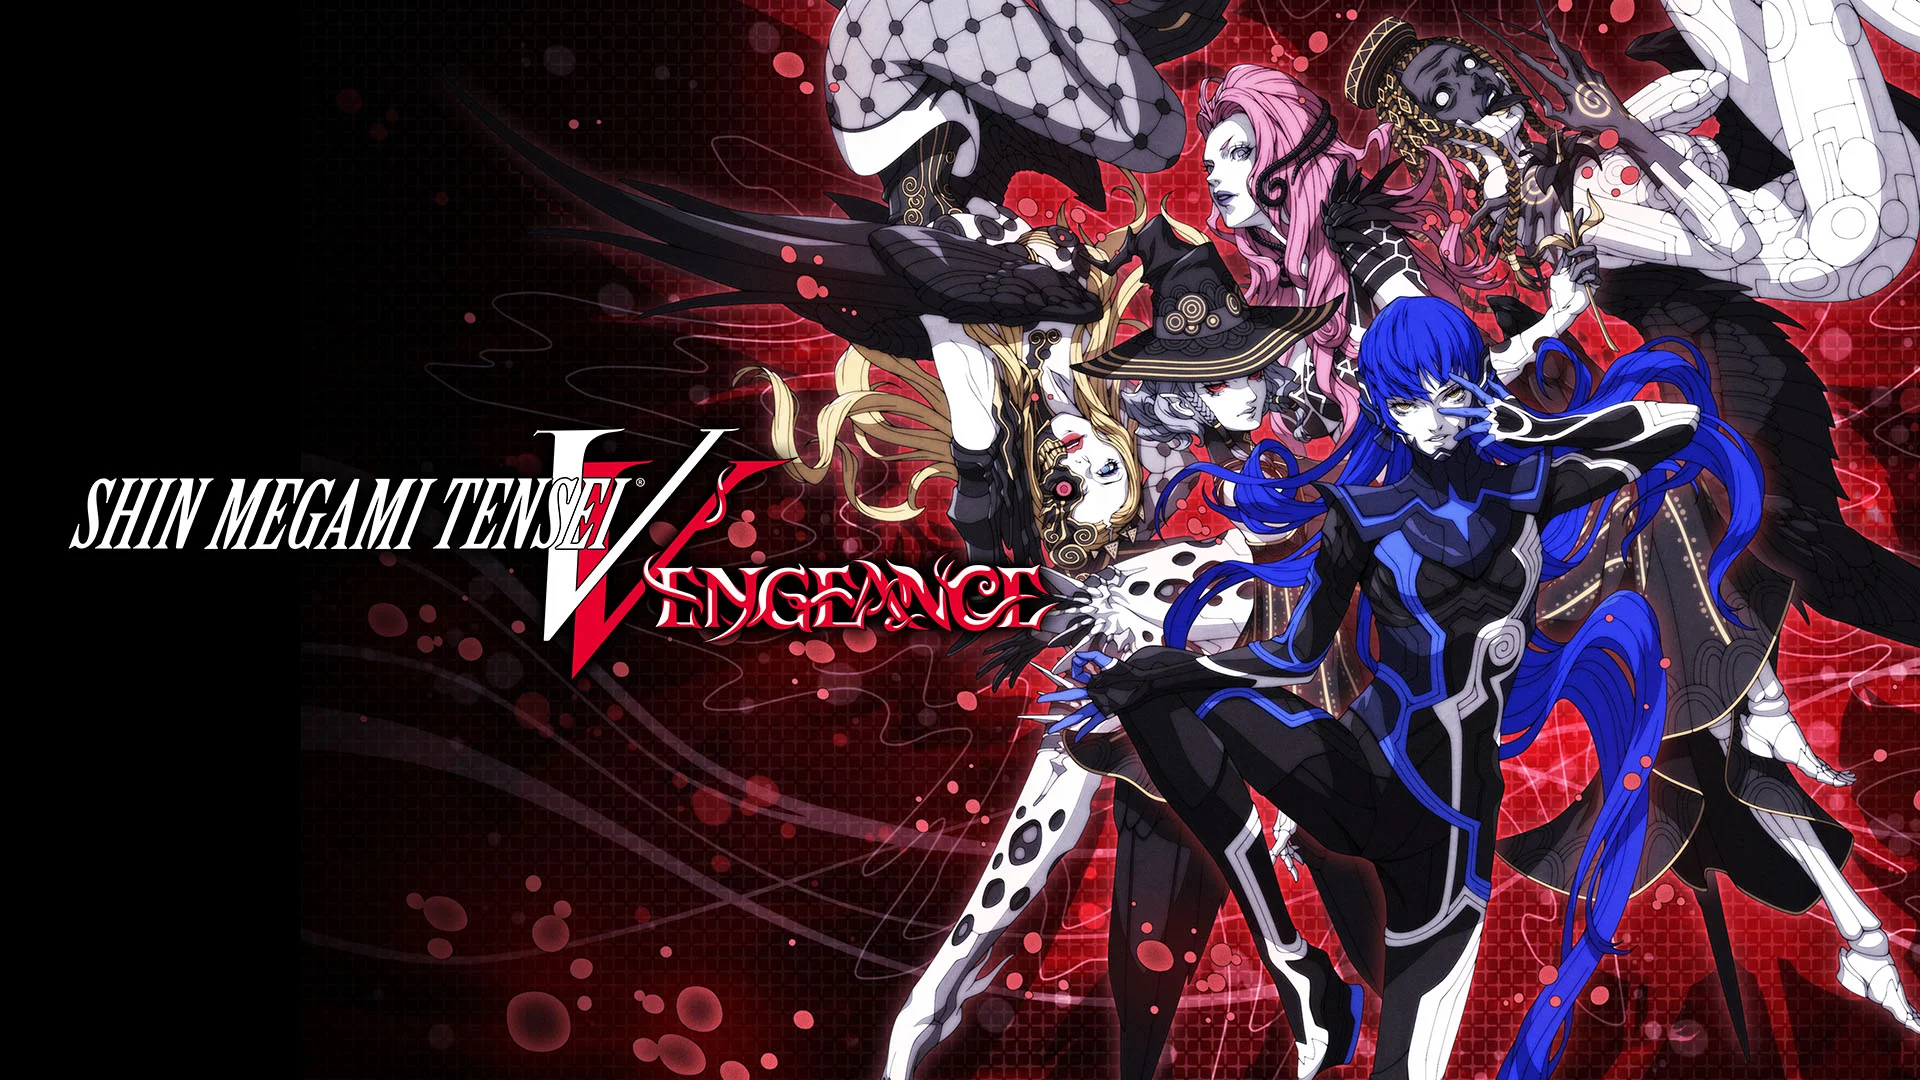 Artwork of Shin Megami Tensei V: Vengeance